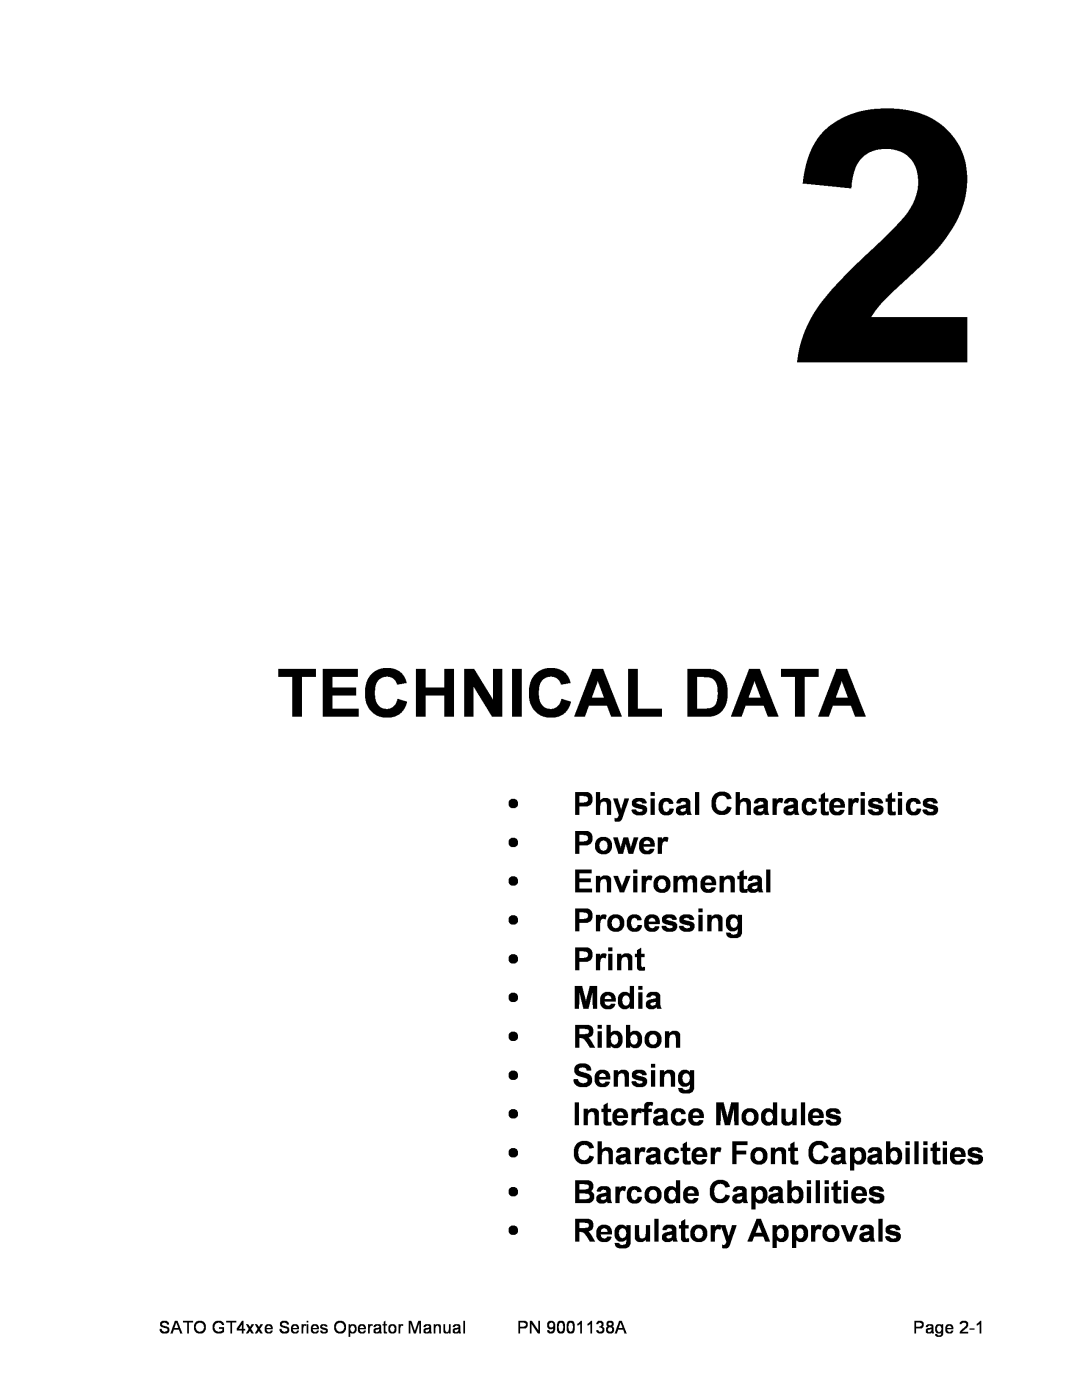 SATO GT 424e, GT408, GT 410 manual Technical Data, Physical Characteristics Power Enviromental Processing Print Media 